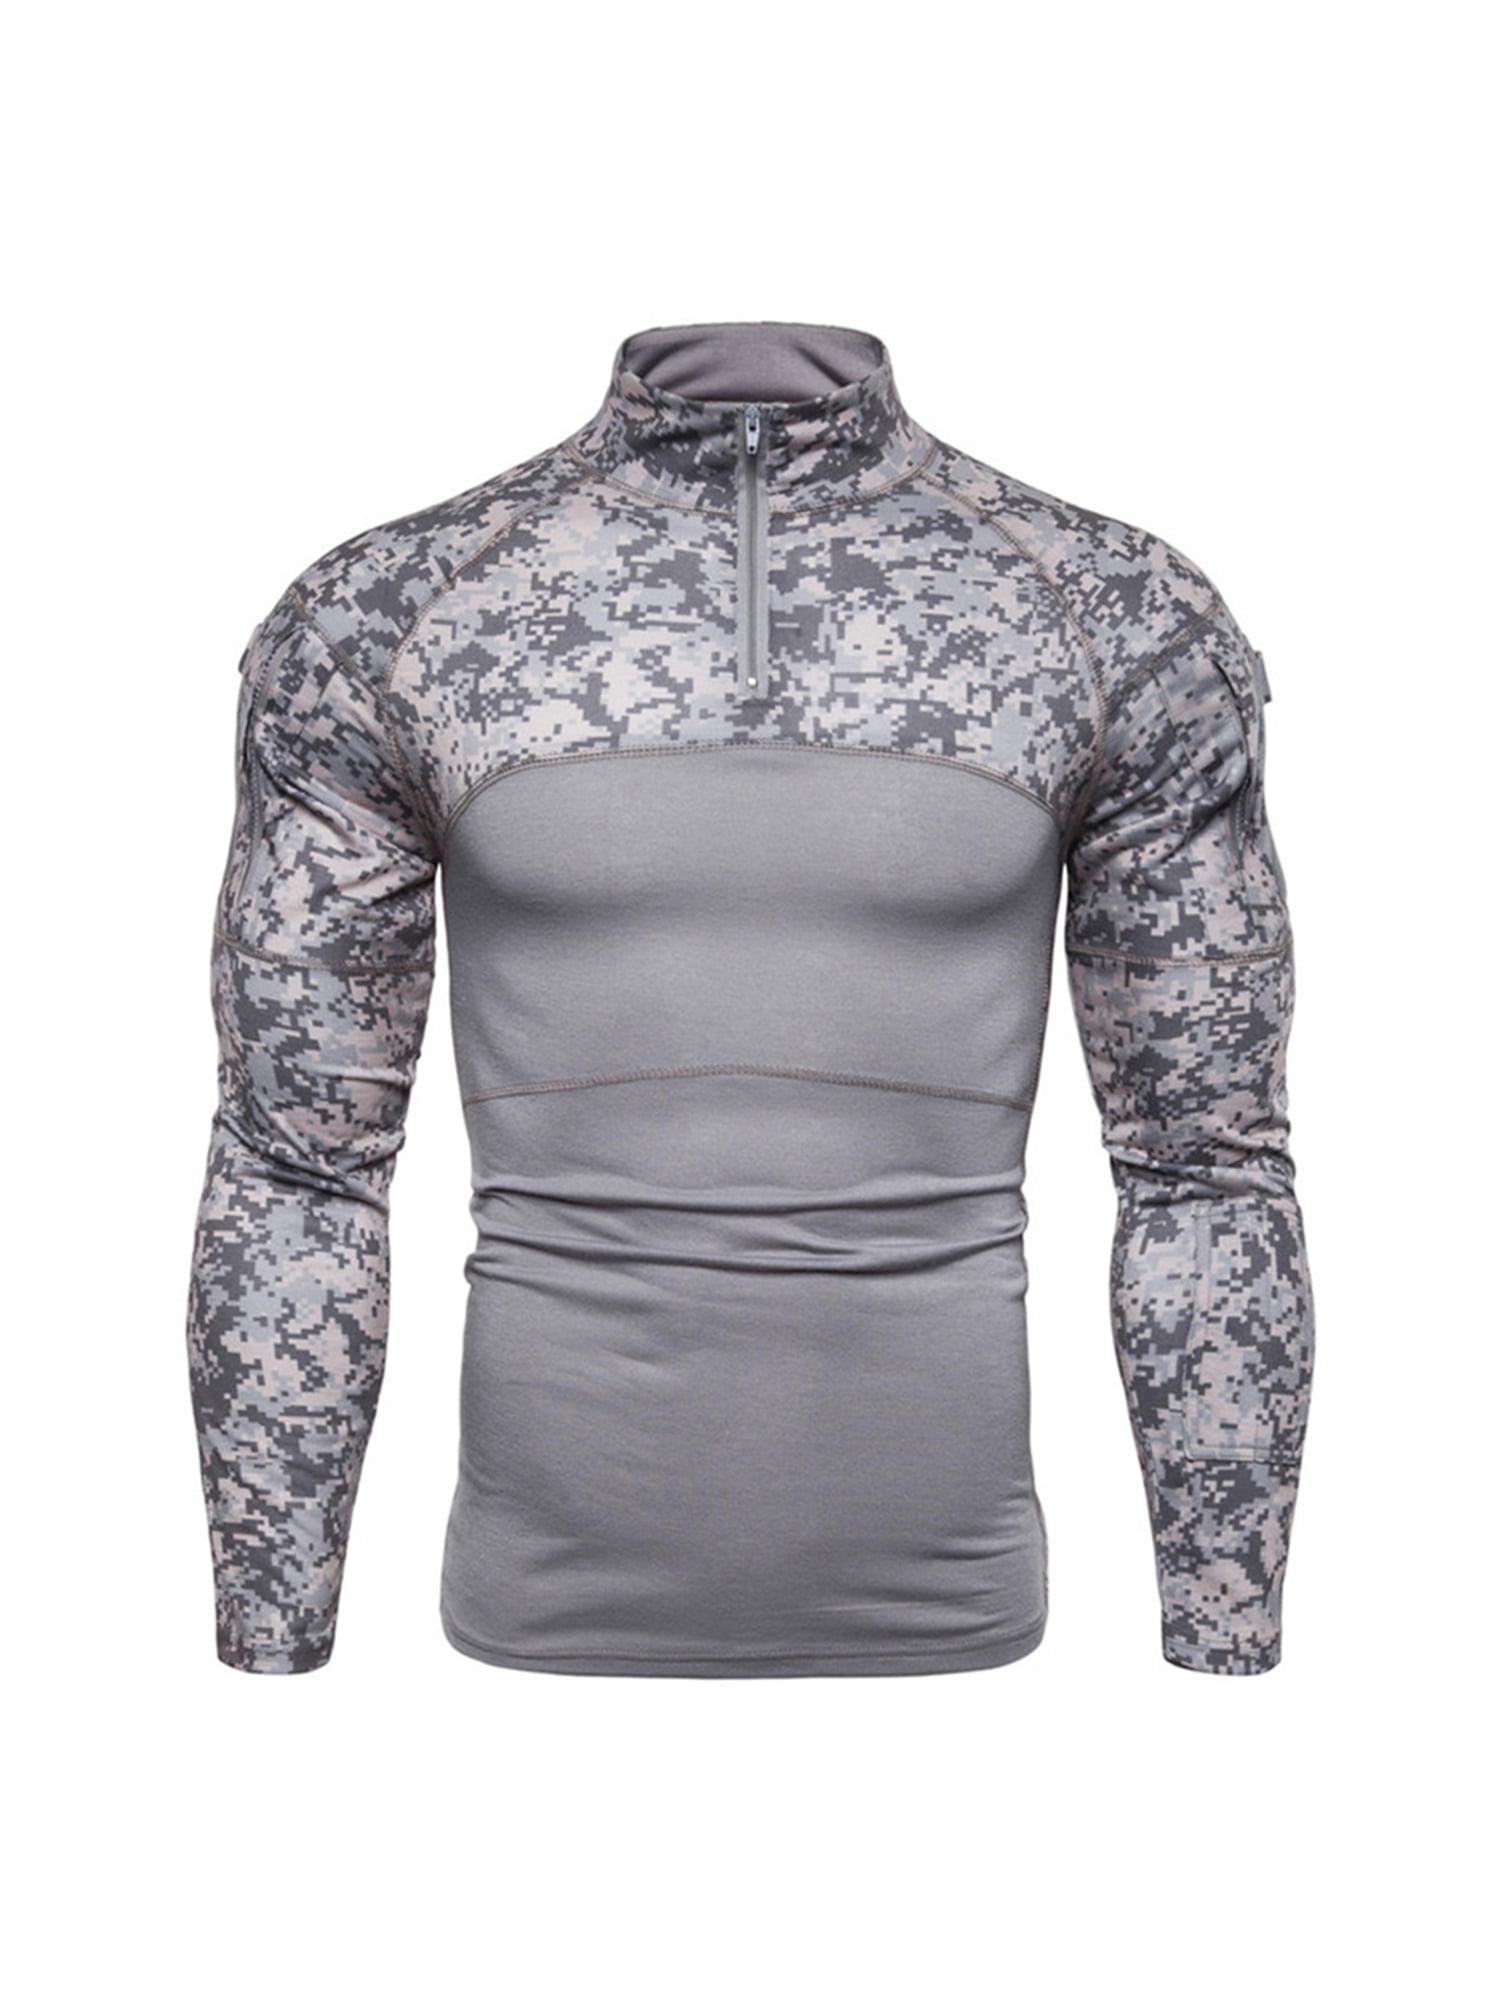 ANTARCTICA Mens Long Sleeve Tactical Shirt T-Shirt Men's Military Rapid Assault Army Combat Rapid Assault Slim Fit 